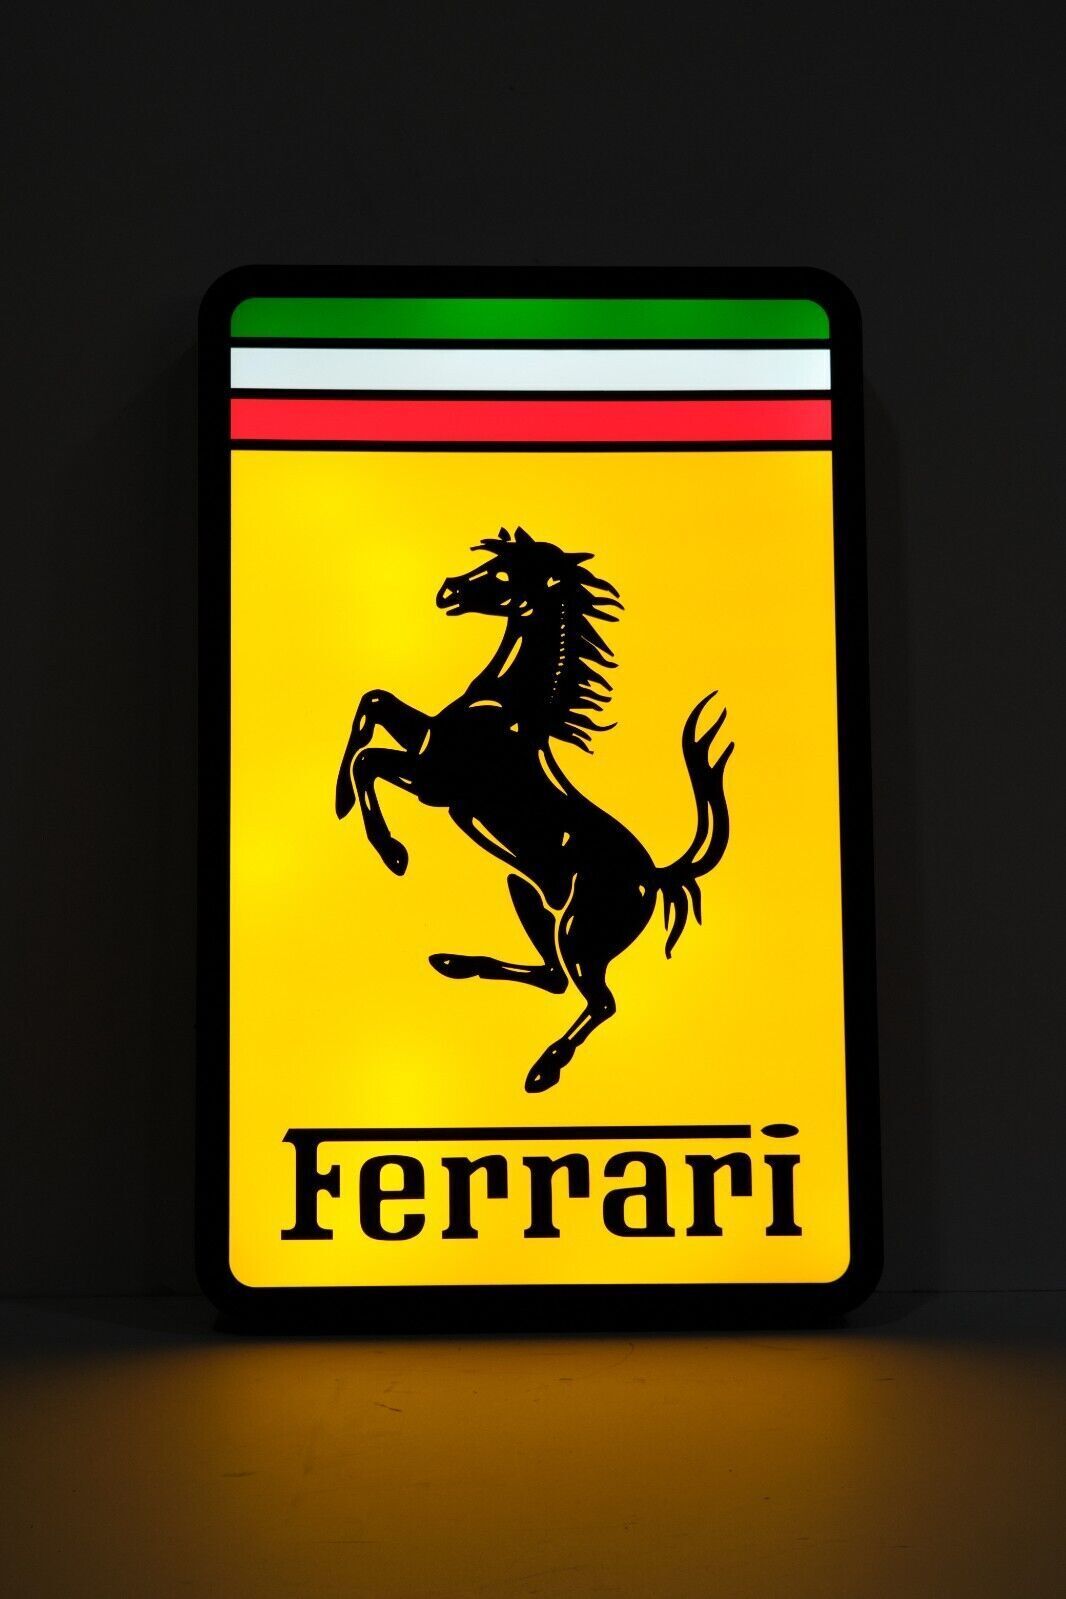 Ferrari illuminated sign | Ferrari Led illuminated wall light for...